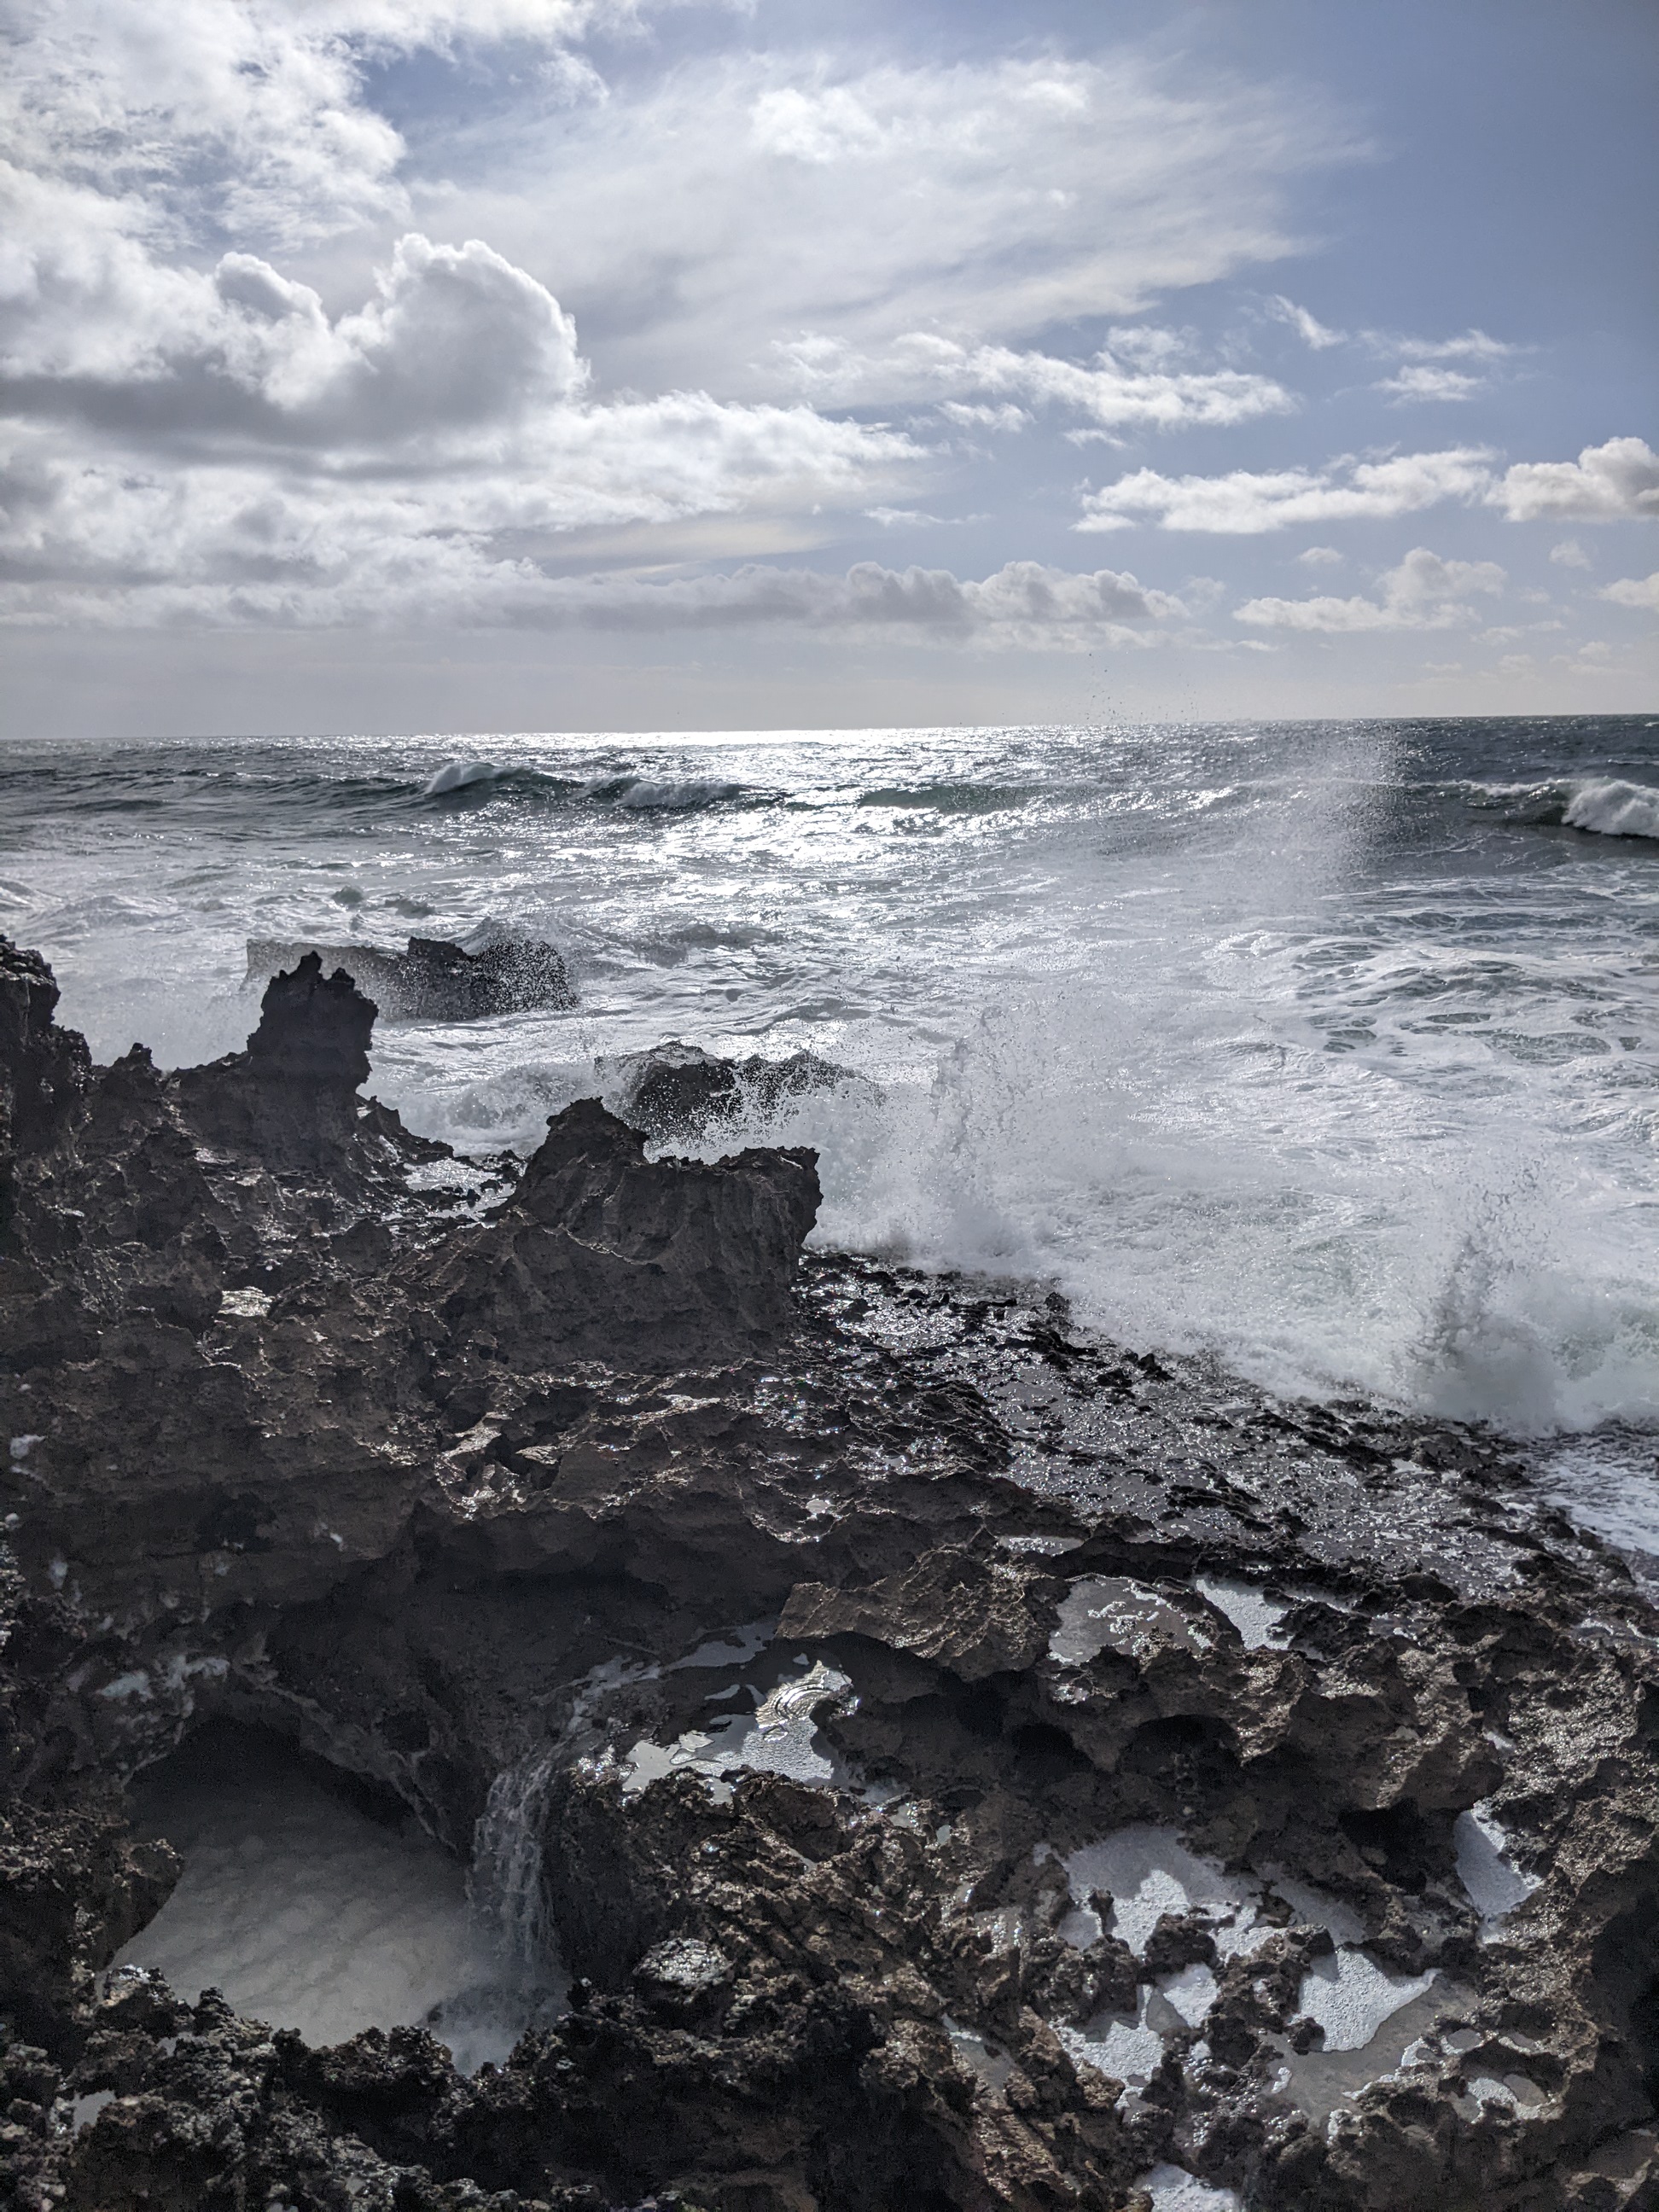 a rocky beach with crashing waves